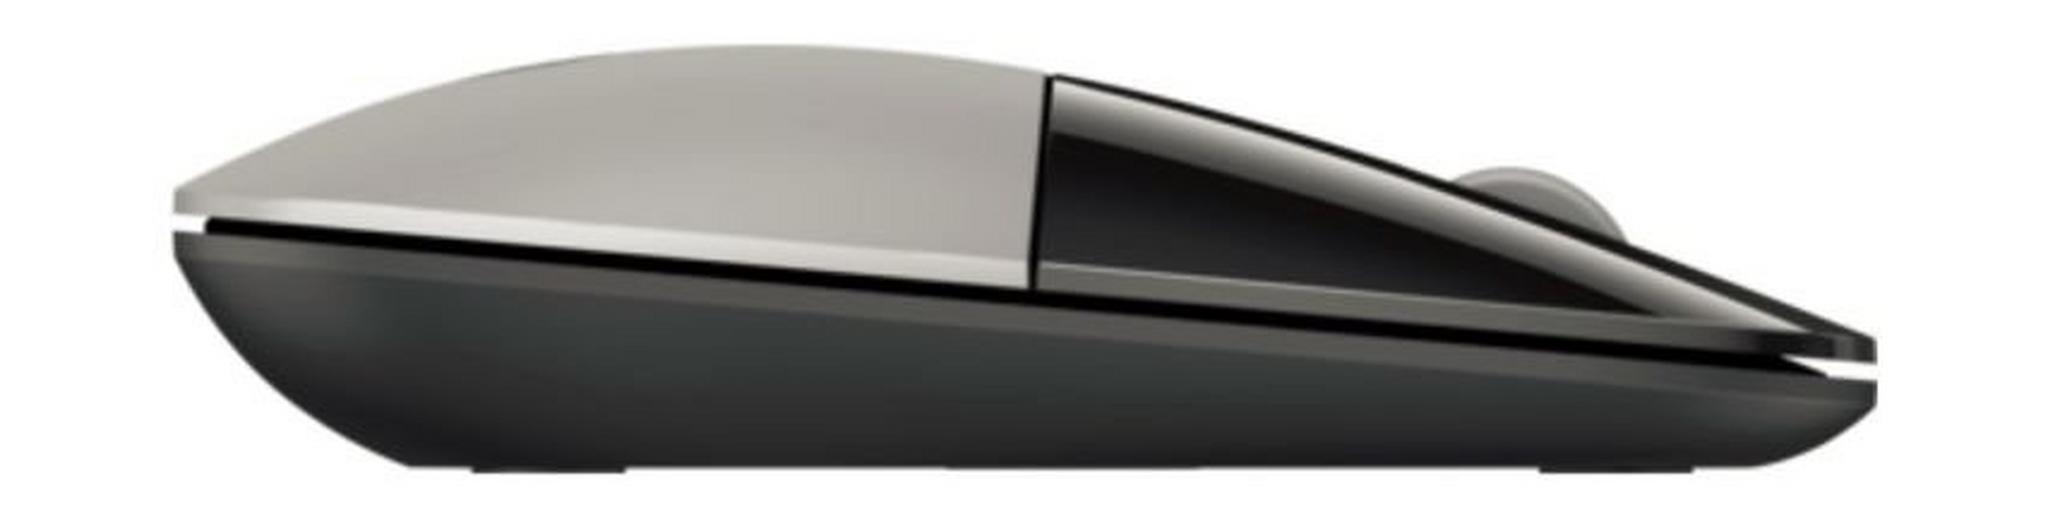 HP Z3700 Wireless USB Mouse (X7Q44AA) – Silver